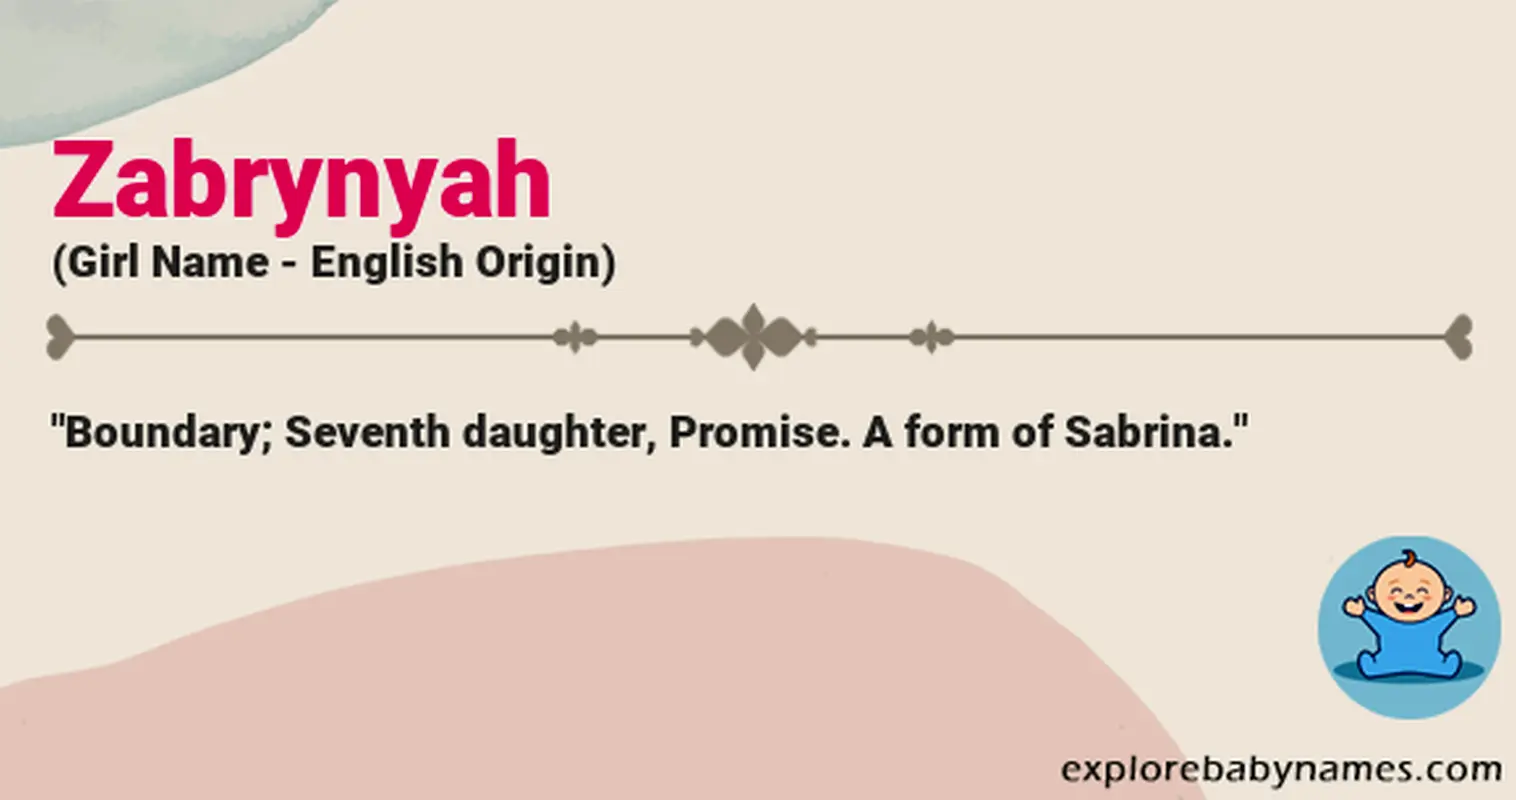 Meaning of Zabrynyah